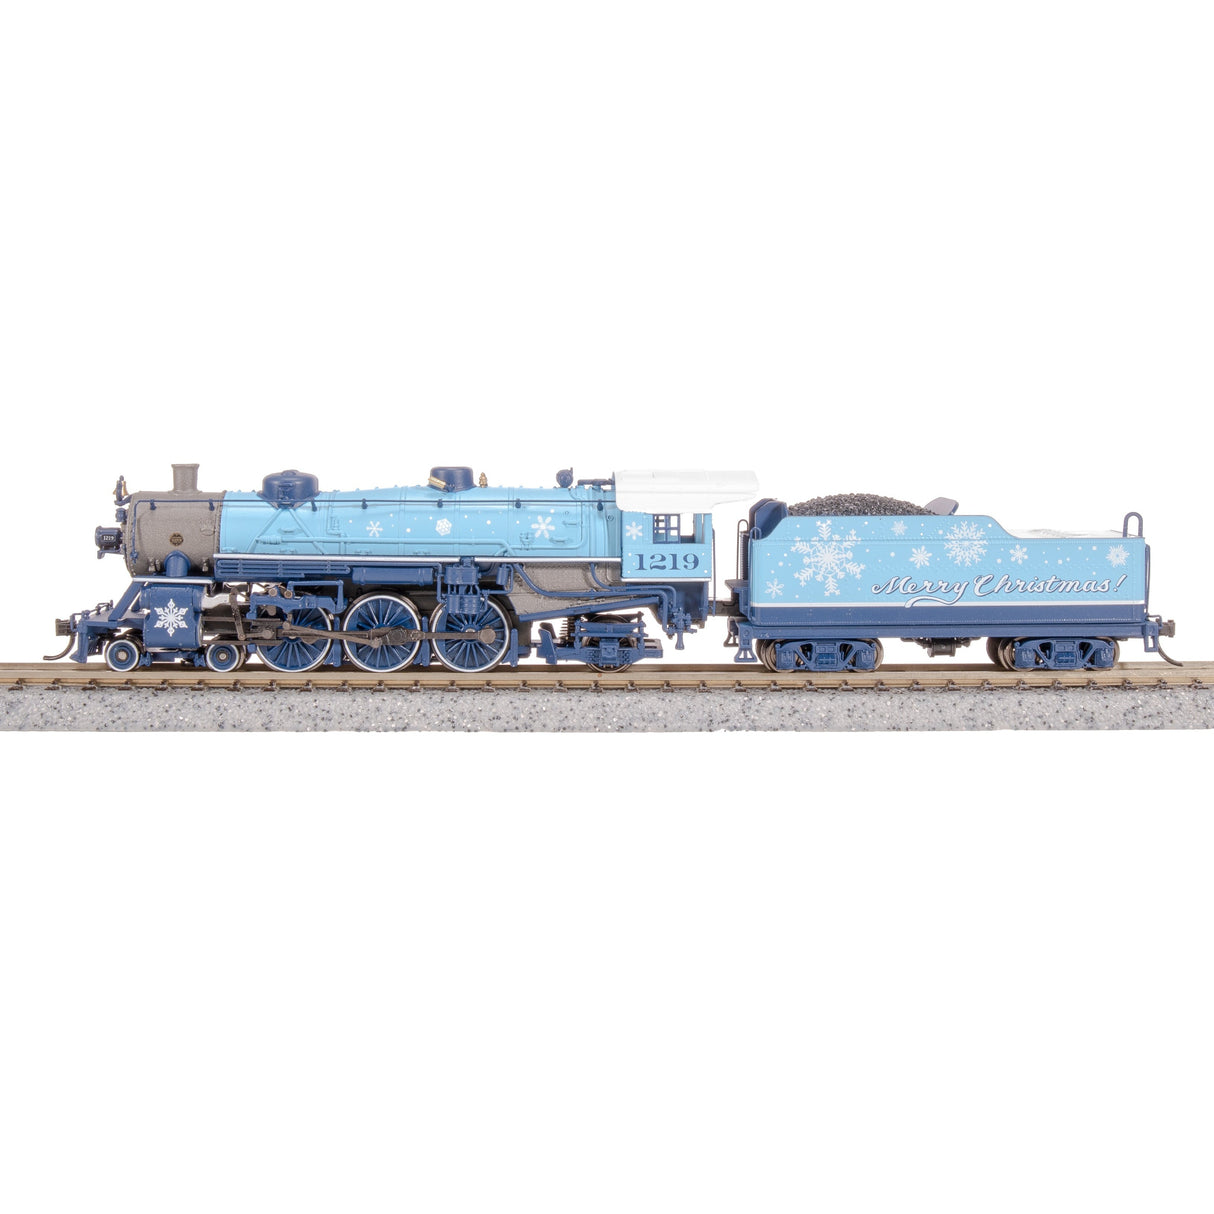 Broadway Limited N Scale USRA 4-6-2 Lt.Pacific Steam Locomotive Christmas #1219/blu&wh